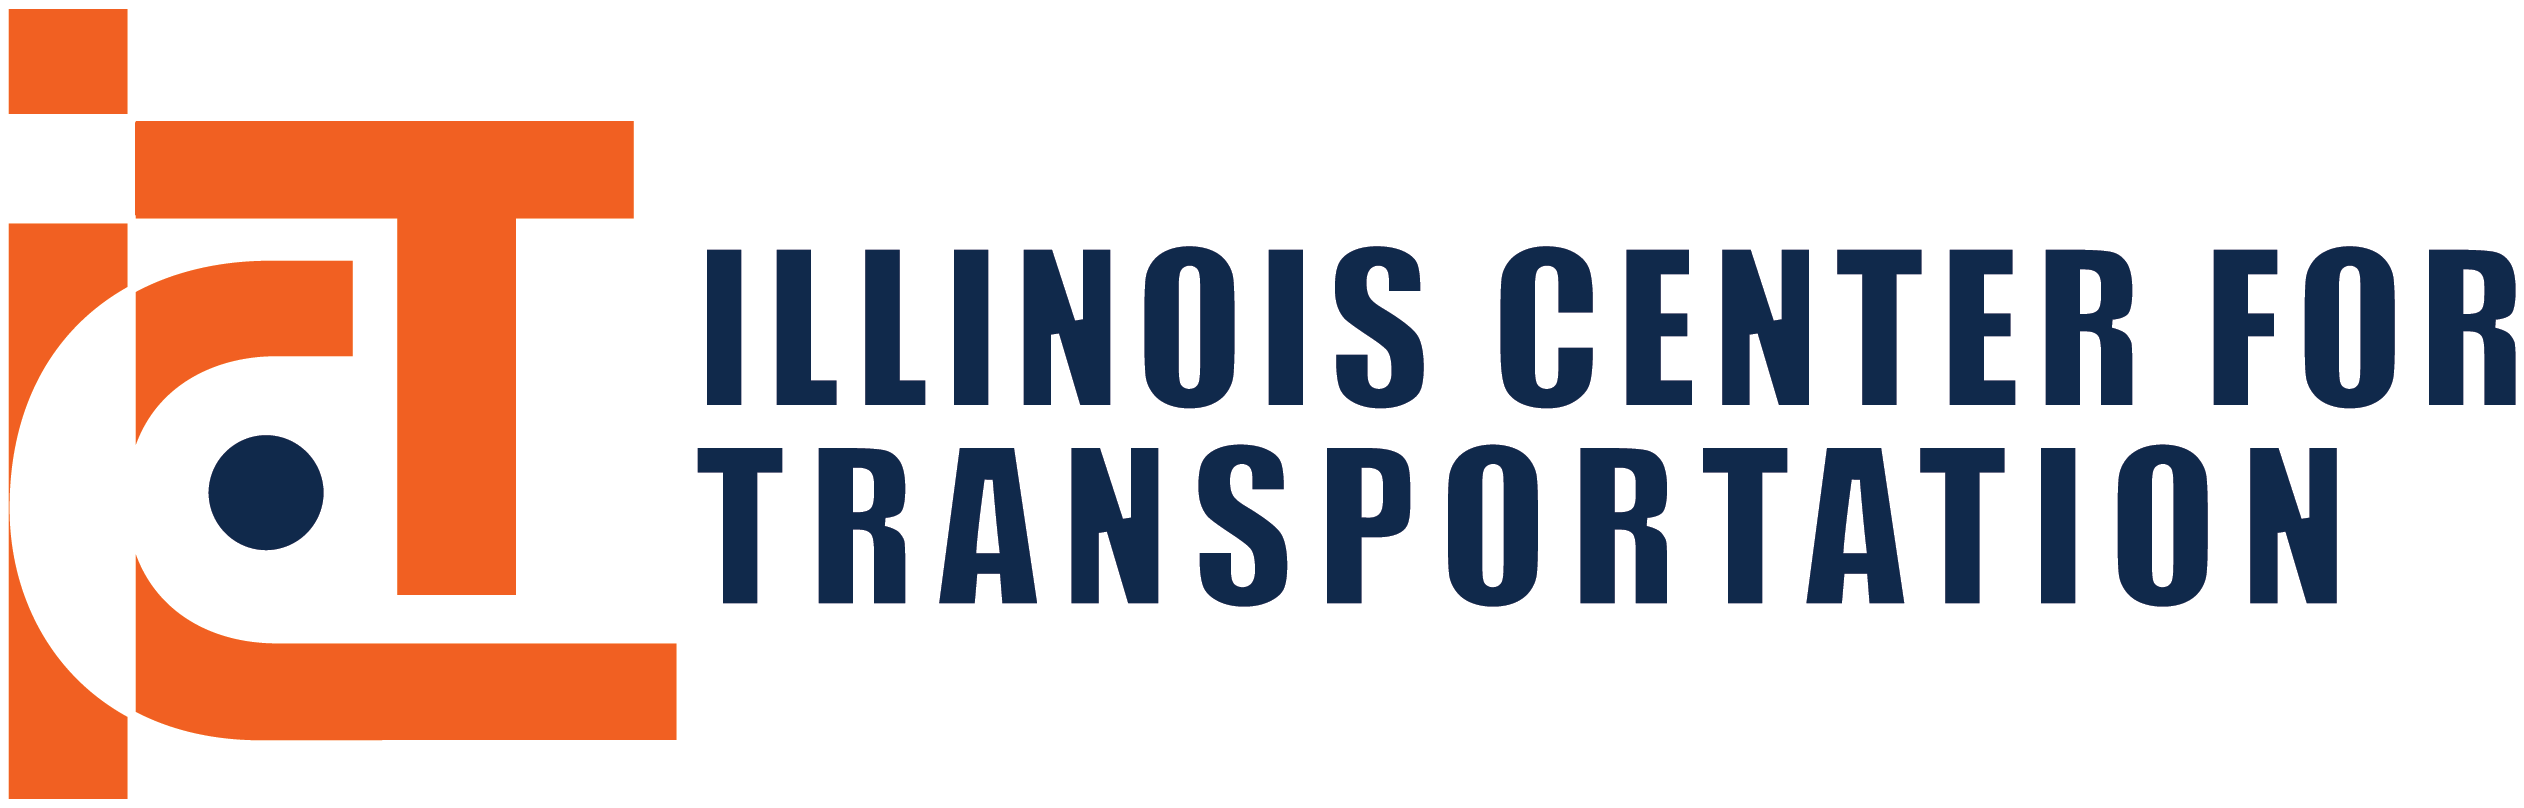 Illinois Center for Transportation